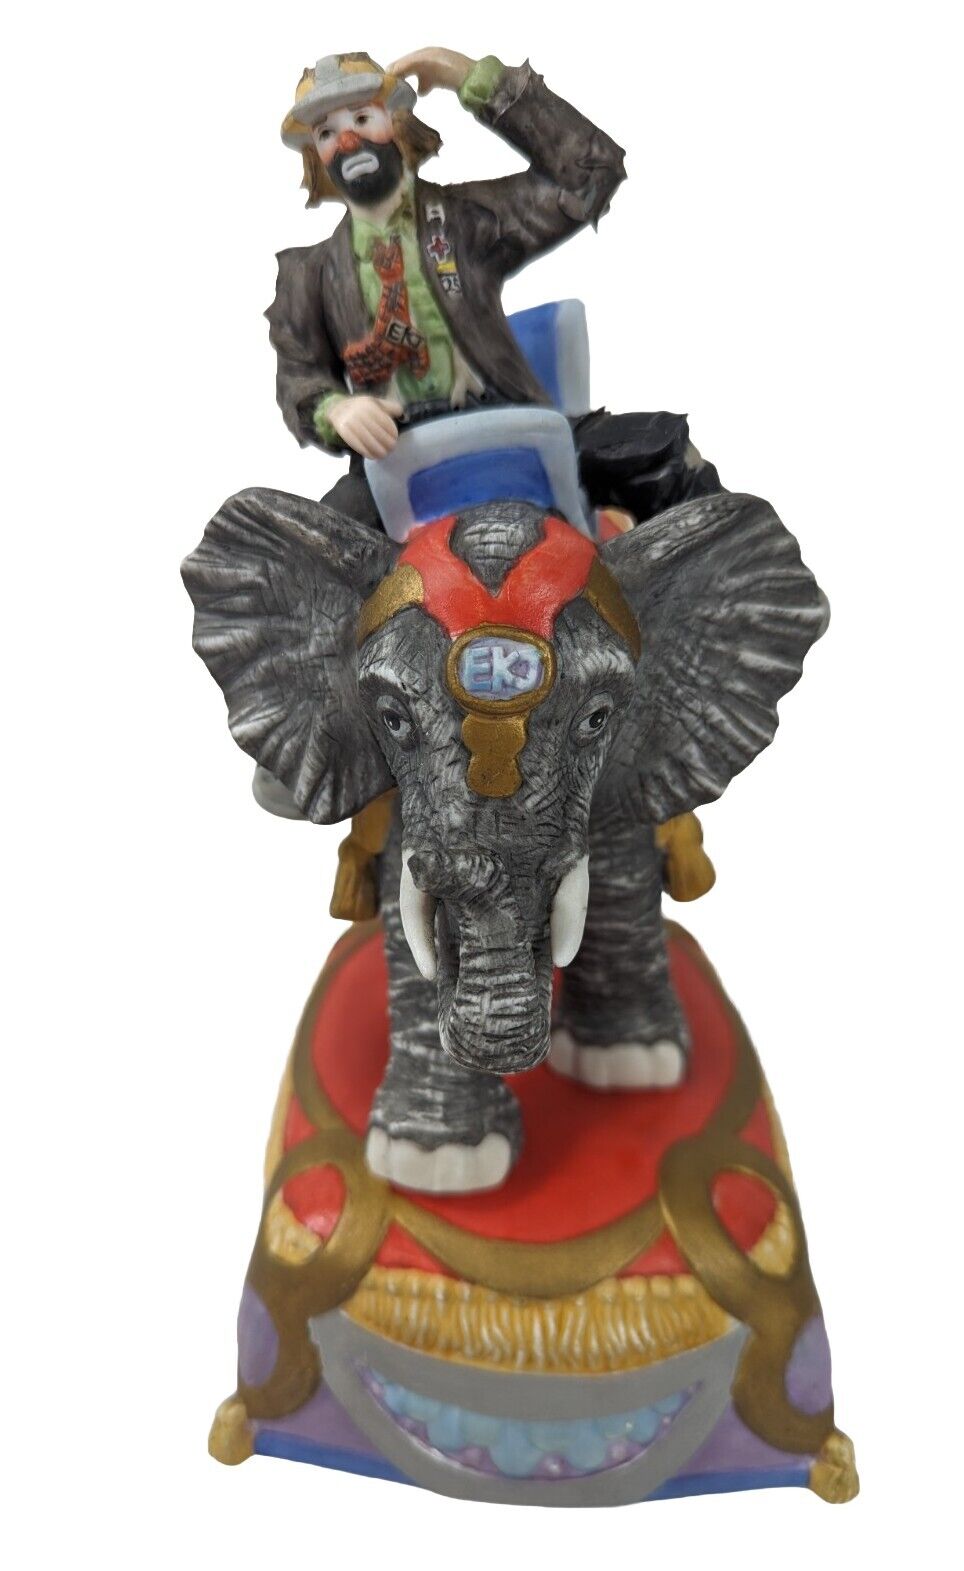 Vintage Emmett Kelly Clown On Elephant At The Circus Figurine Music Box 40 Years